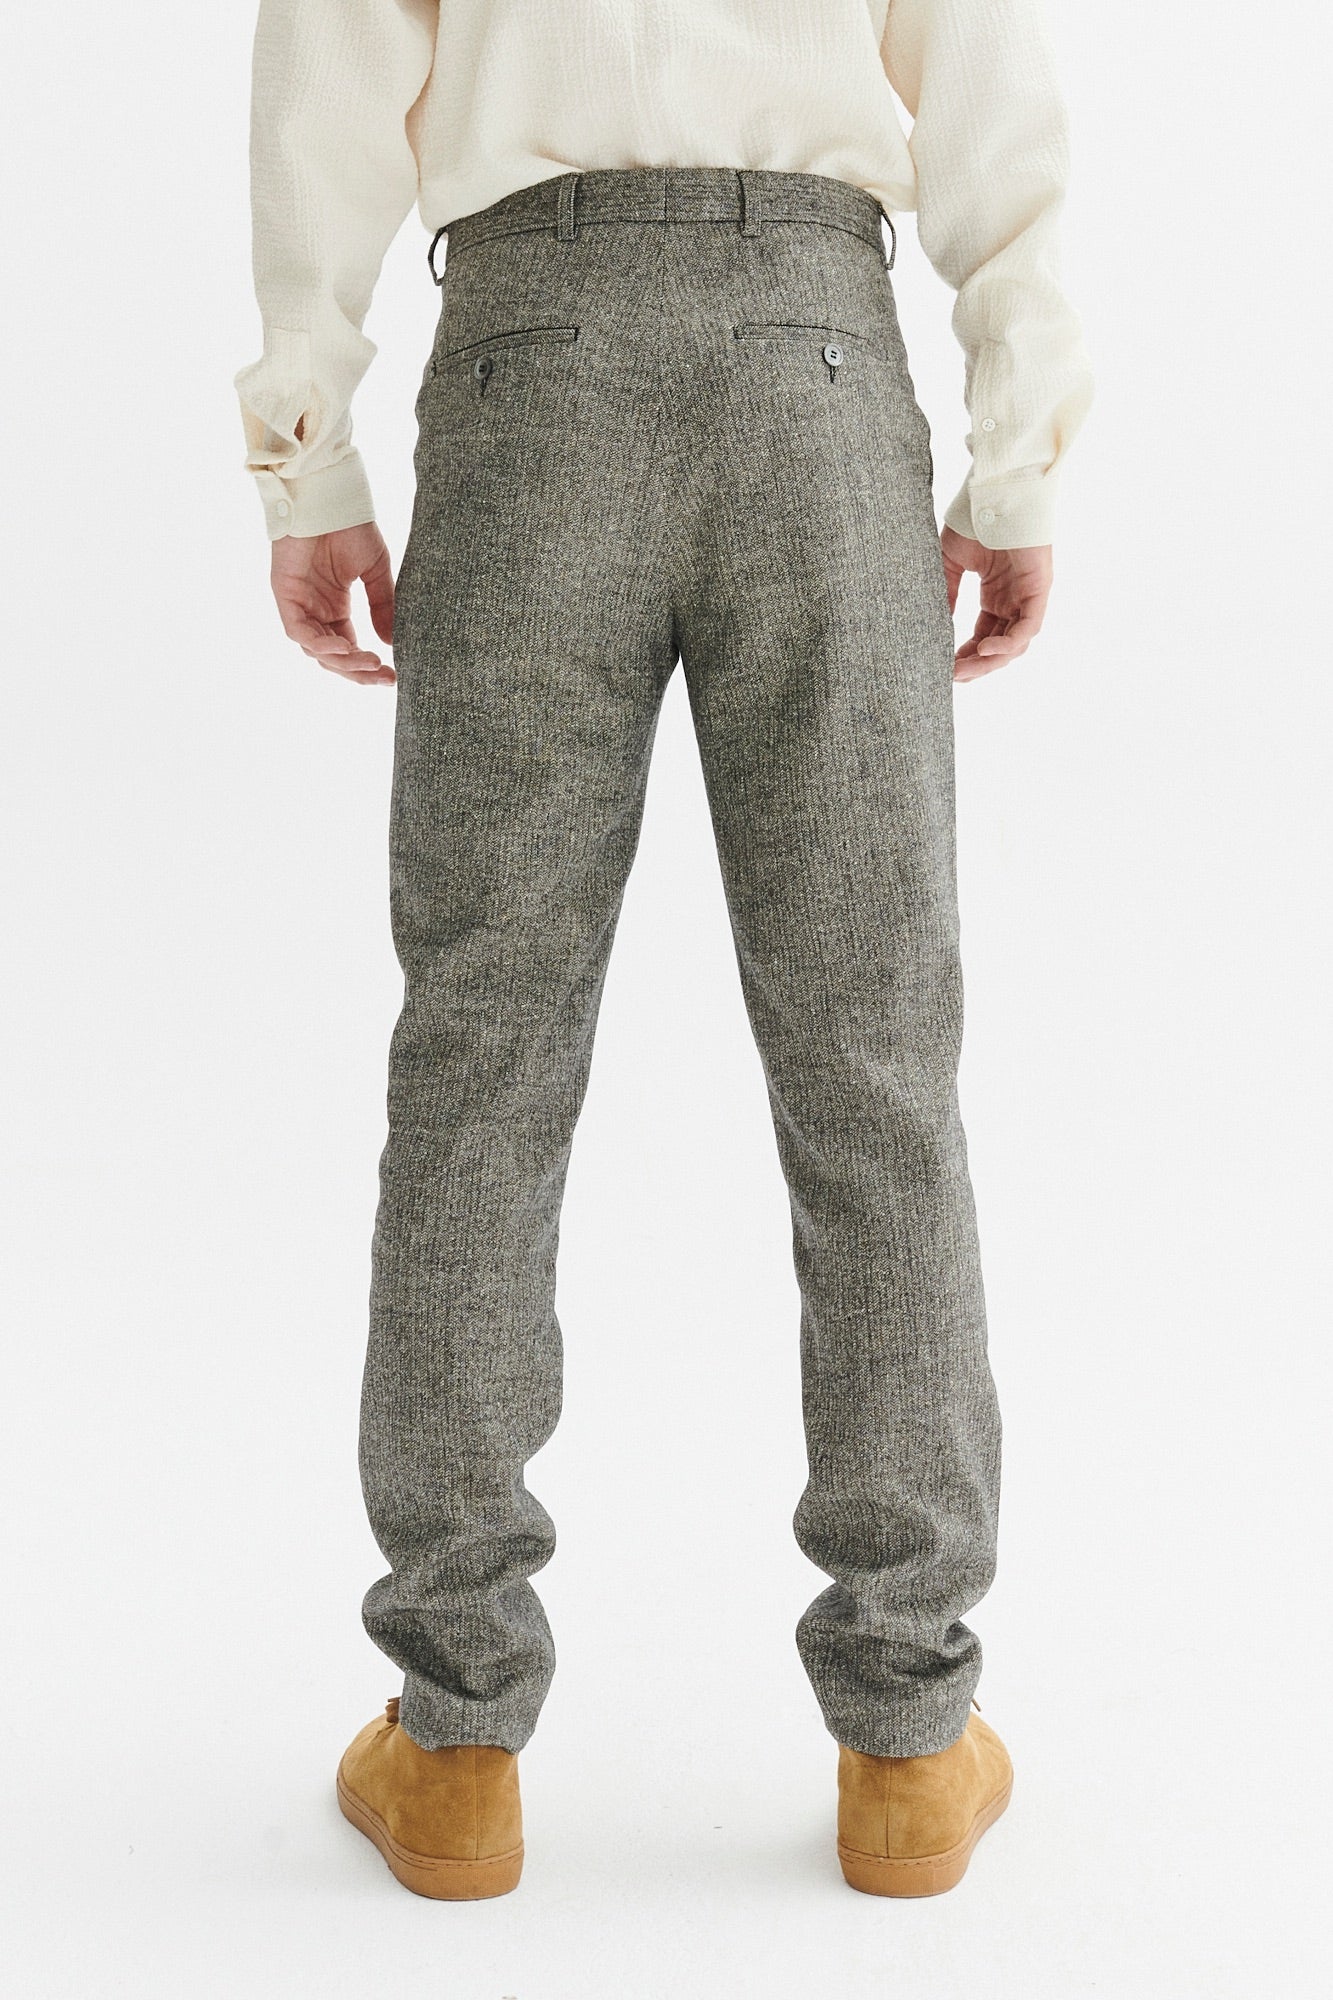 Bohemian Trousers in the Finest Grey Herringbone Italian Wool and